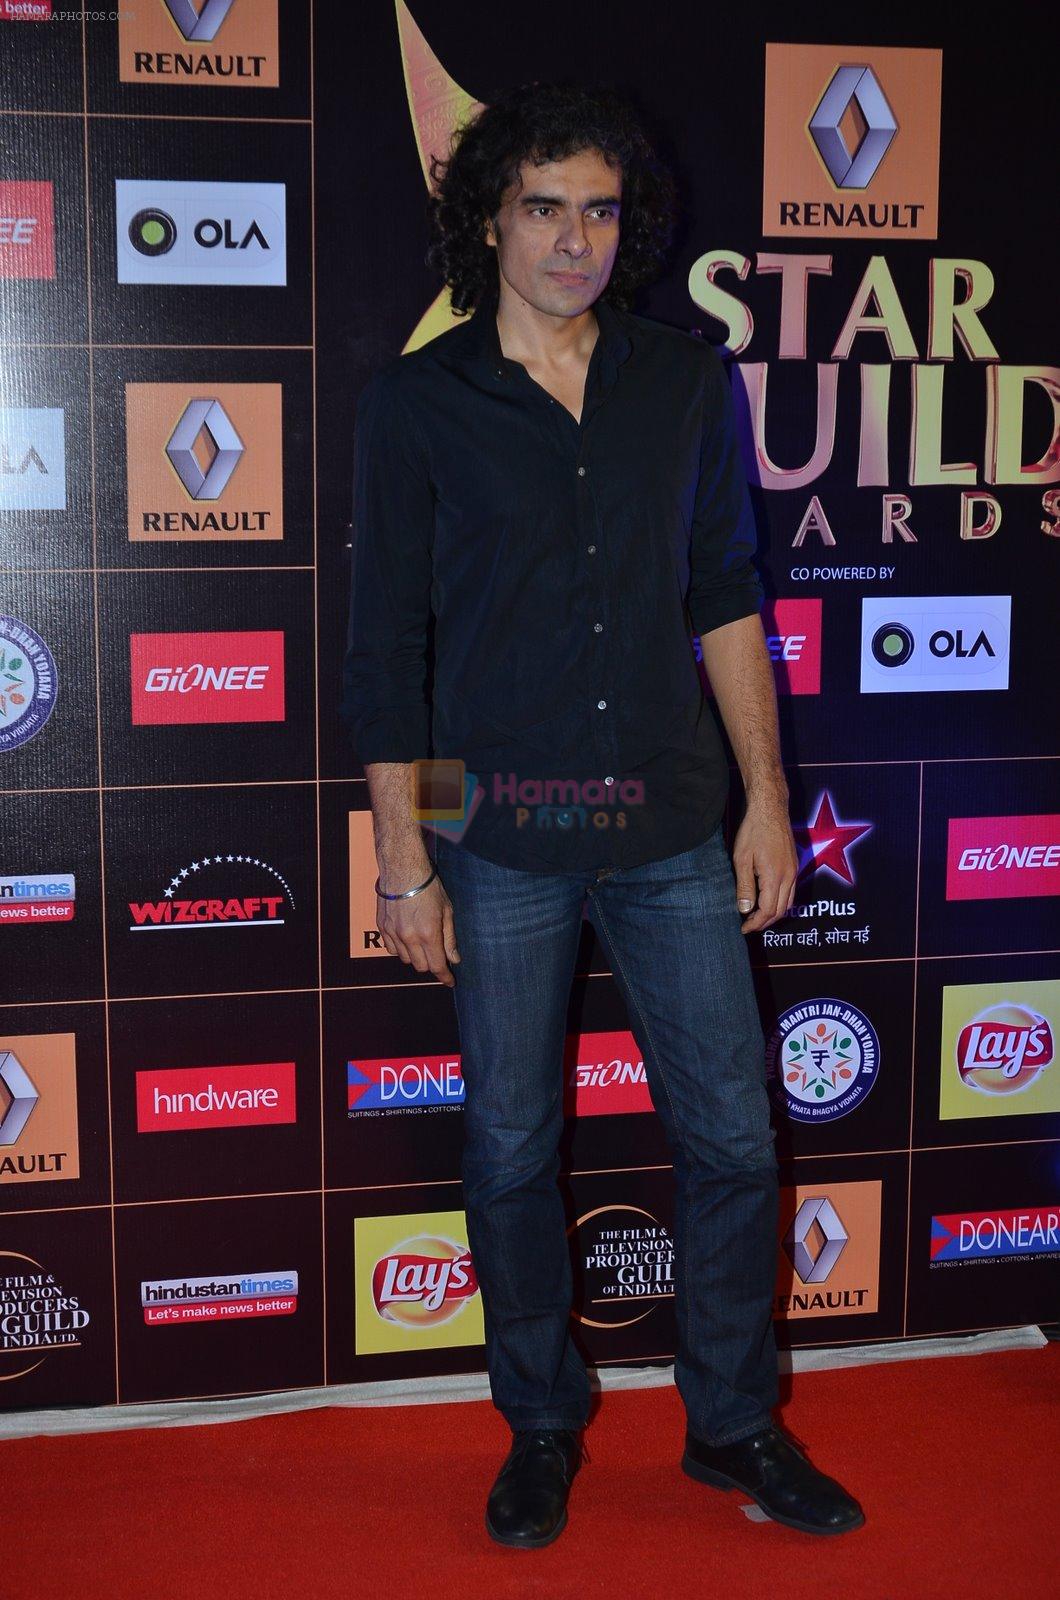 Imtiaz Ali at Producers Guild Awards 2015 in Mumbai on 11th Jan 2015